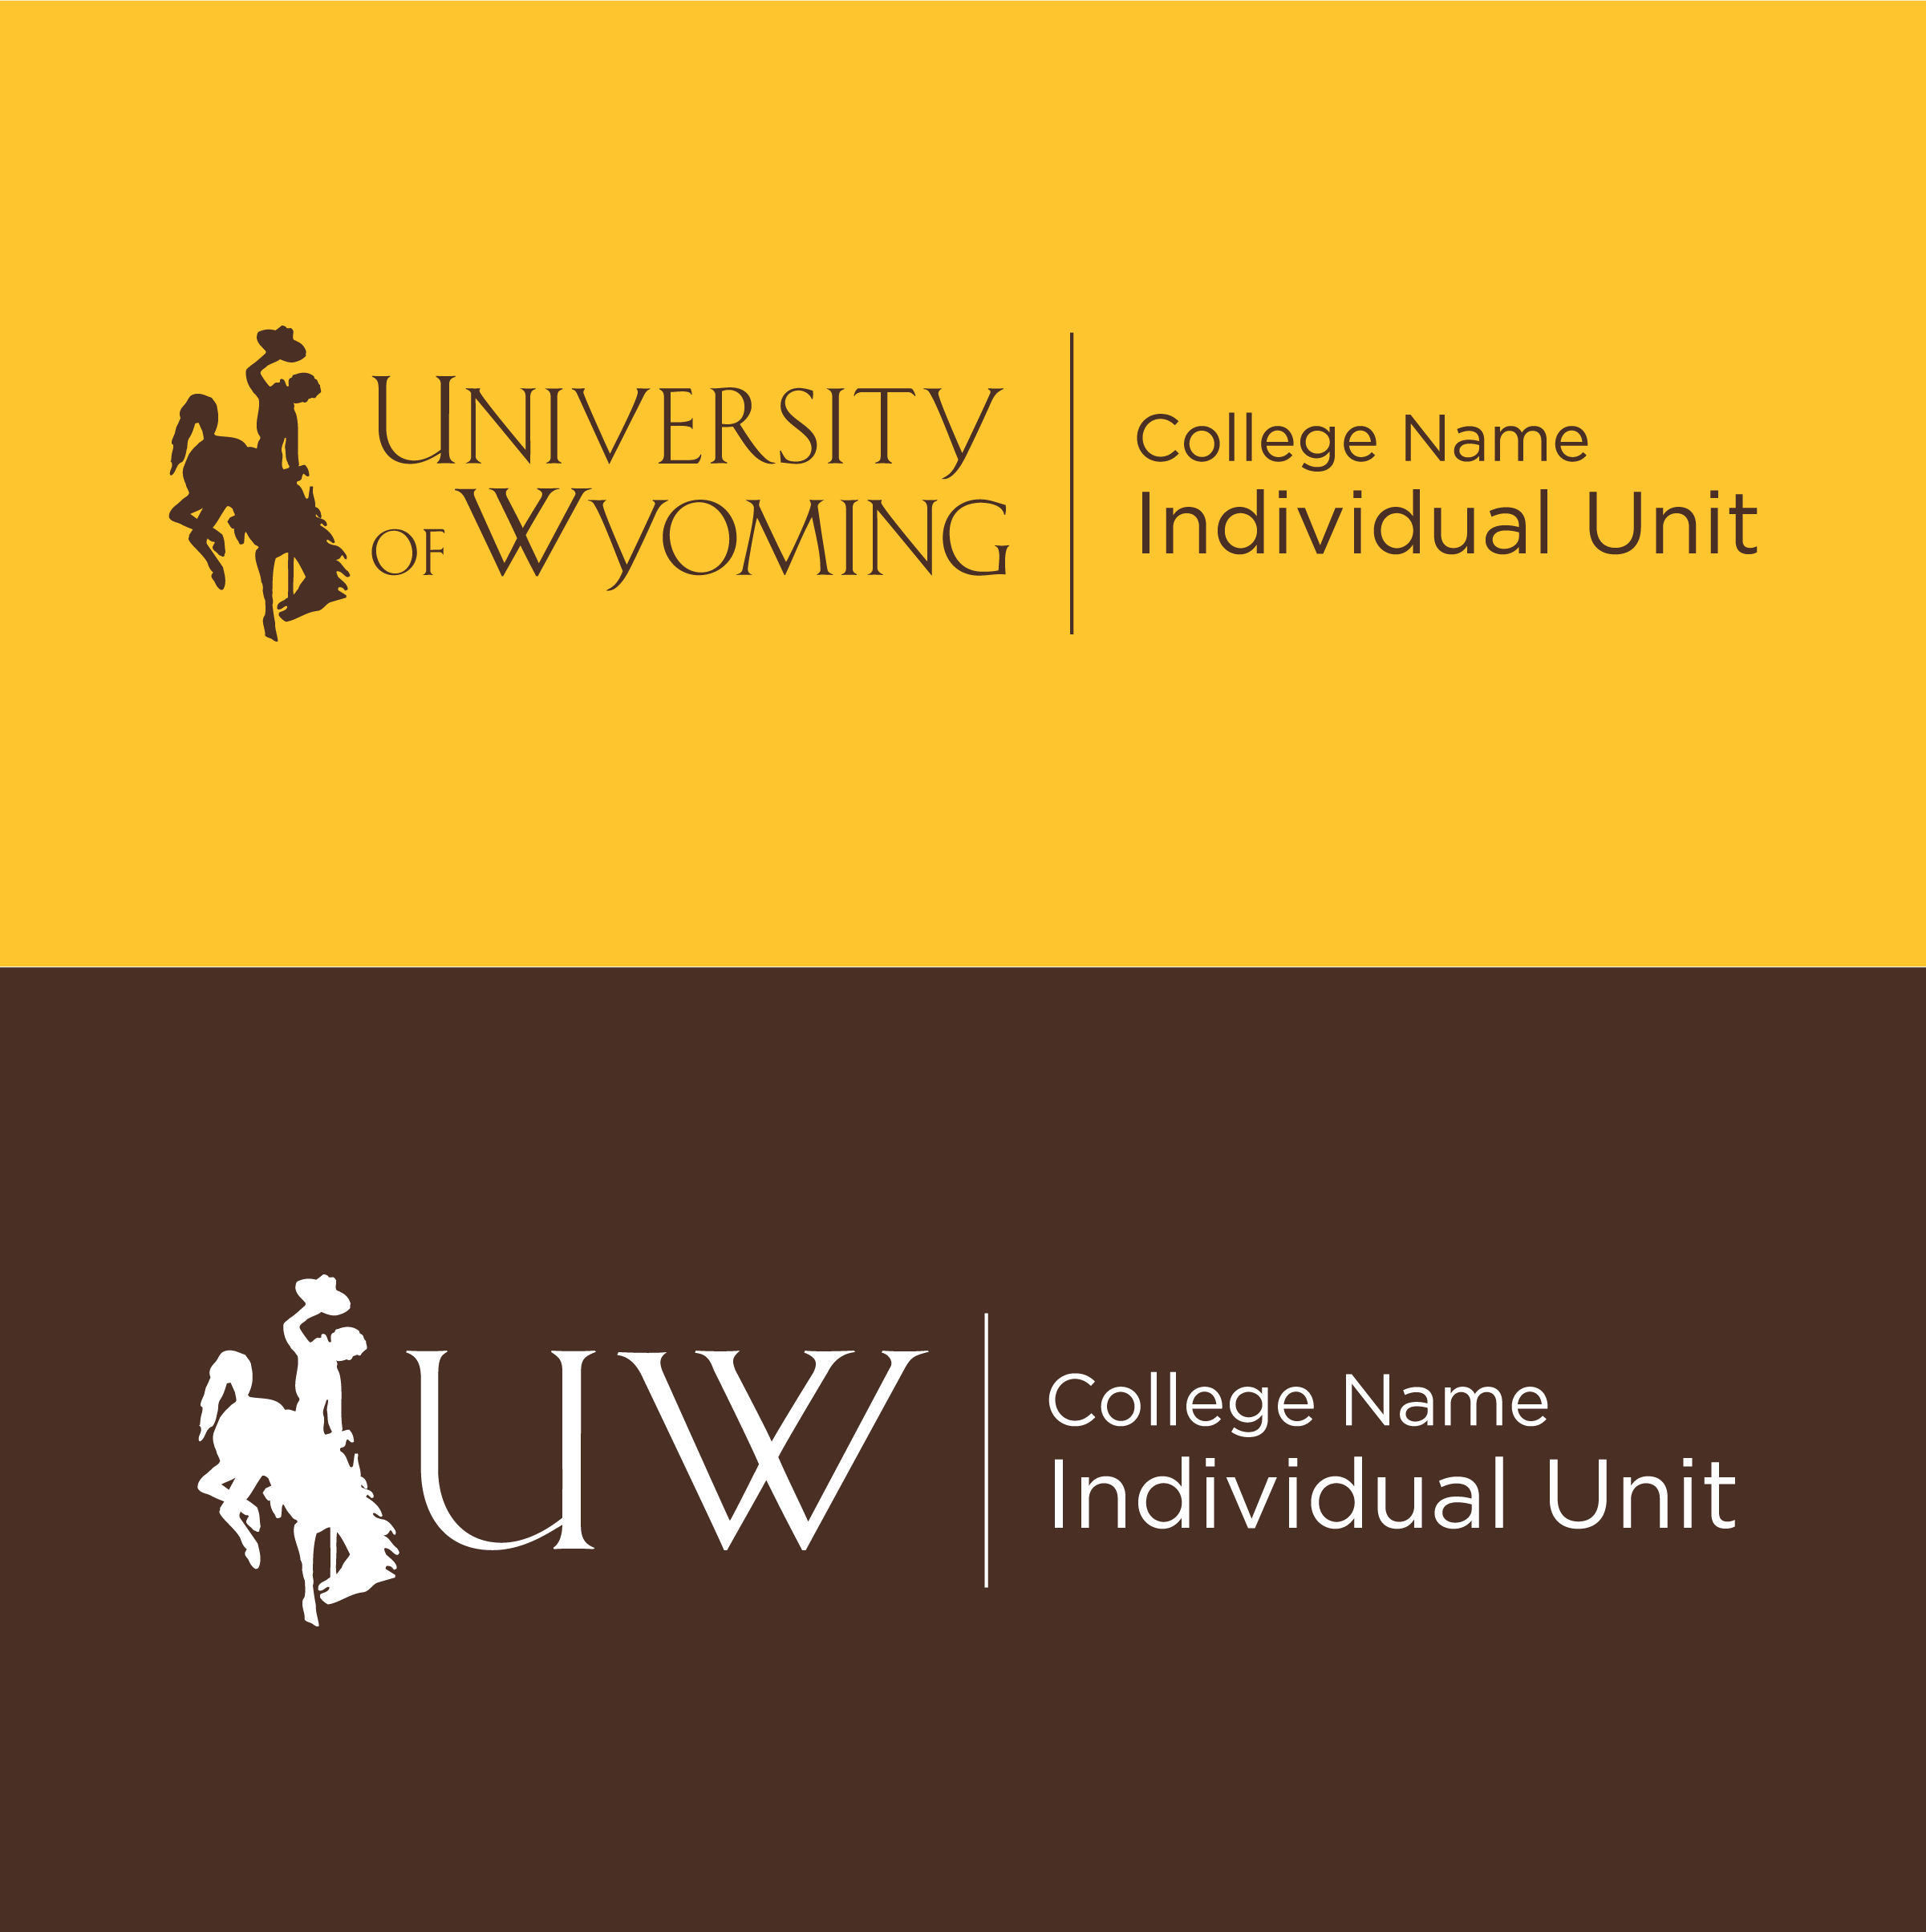 UW Logo - UW Logos and Signatures